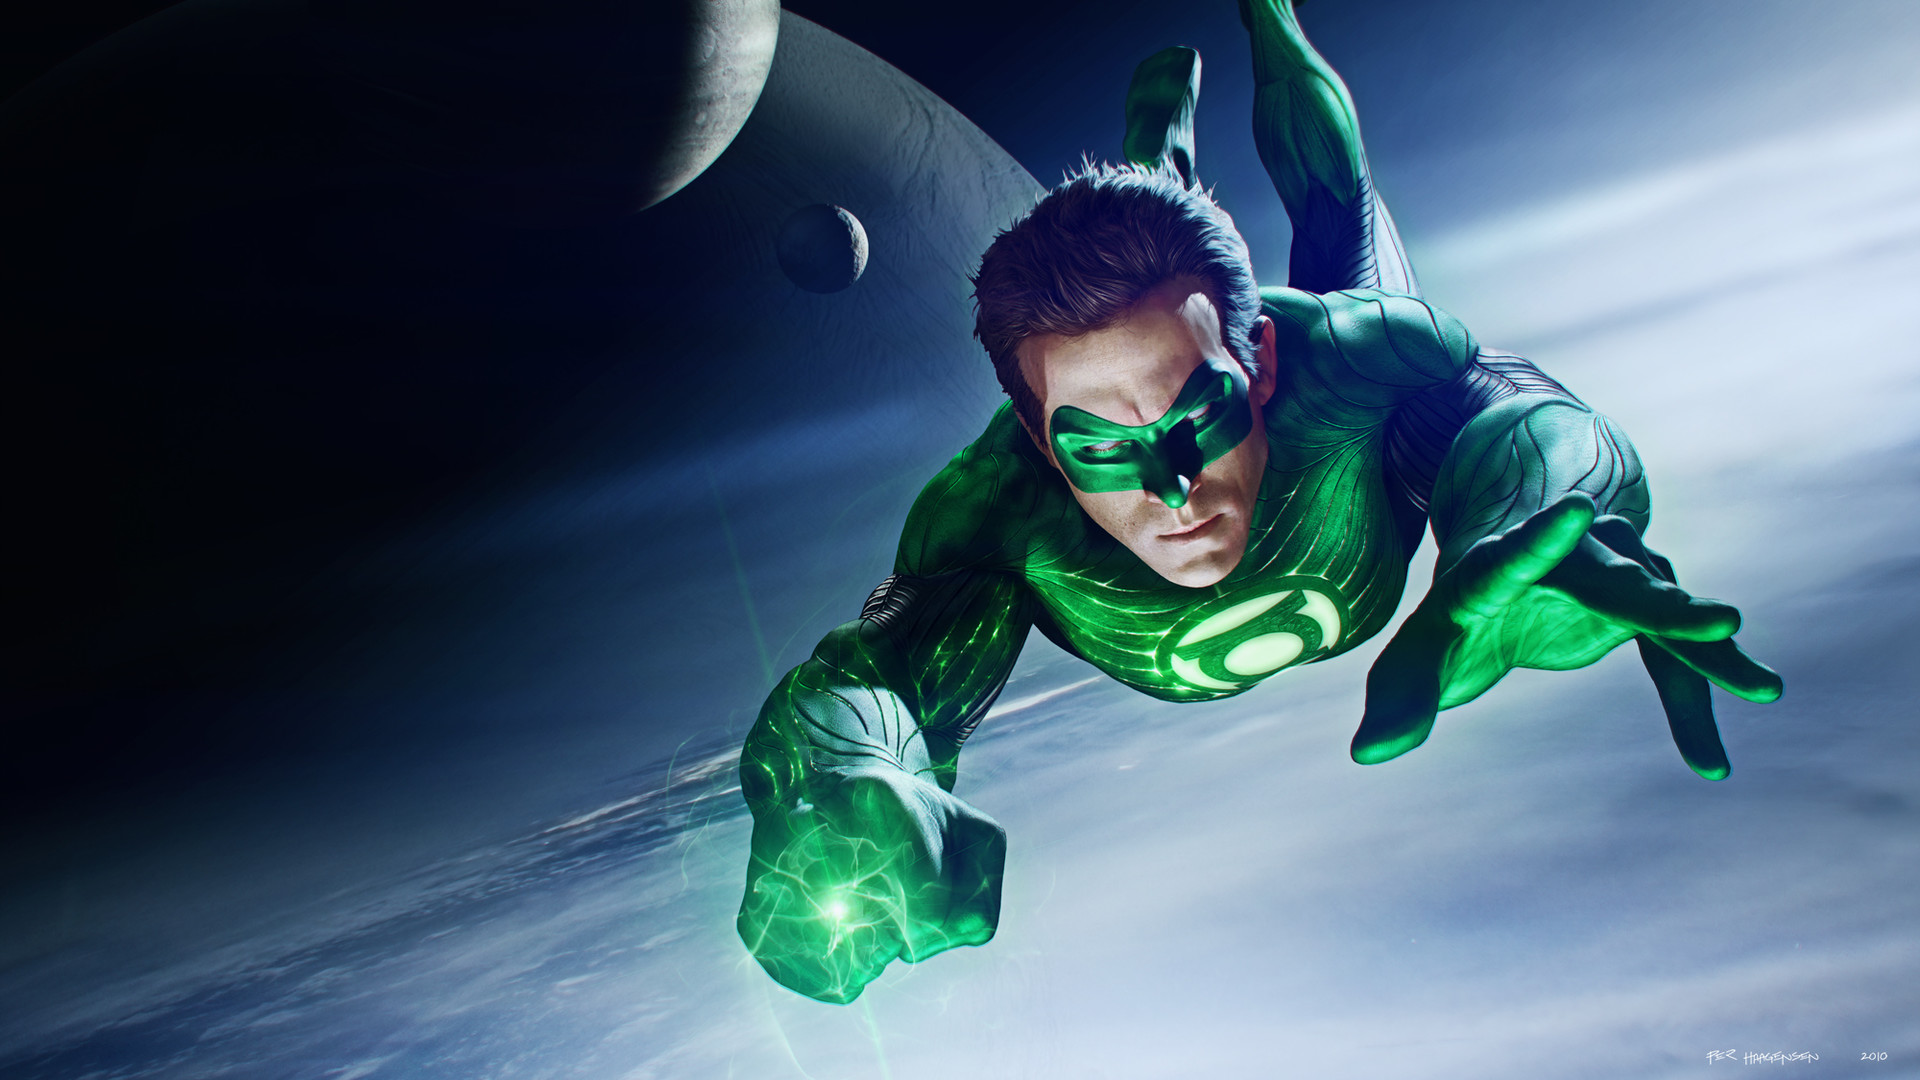 green lantern wallpaper,green lantern,fictional character,extreme sport,justice league,cool